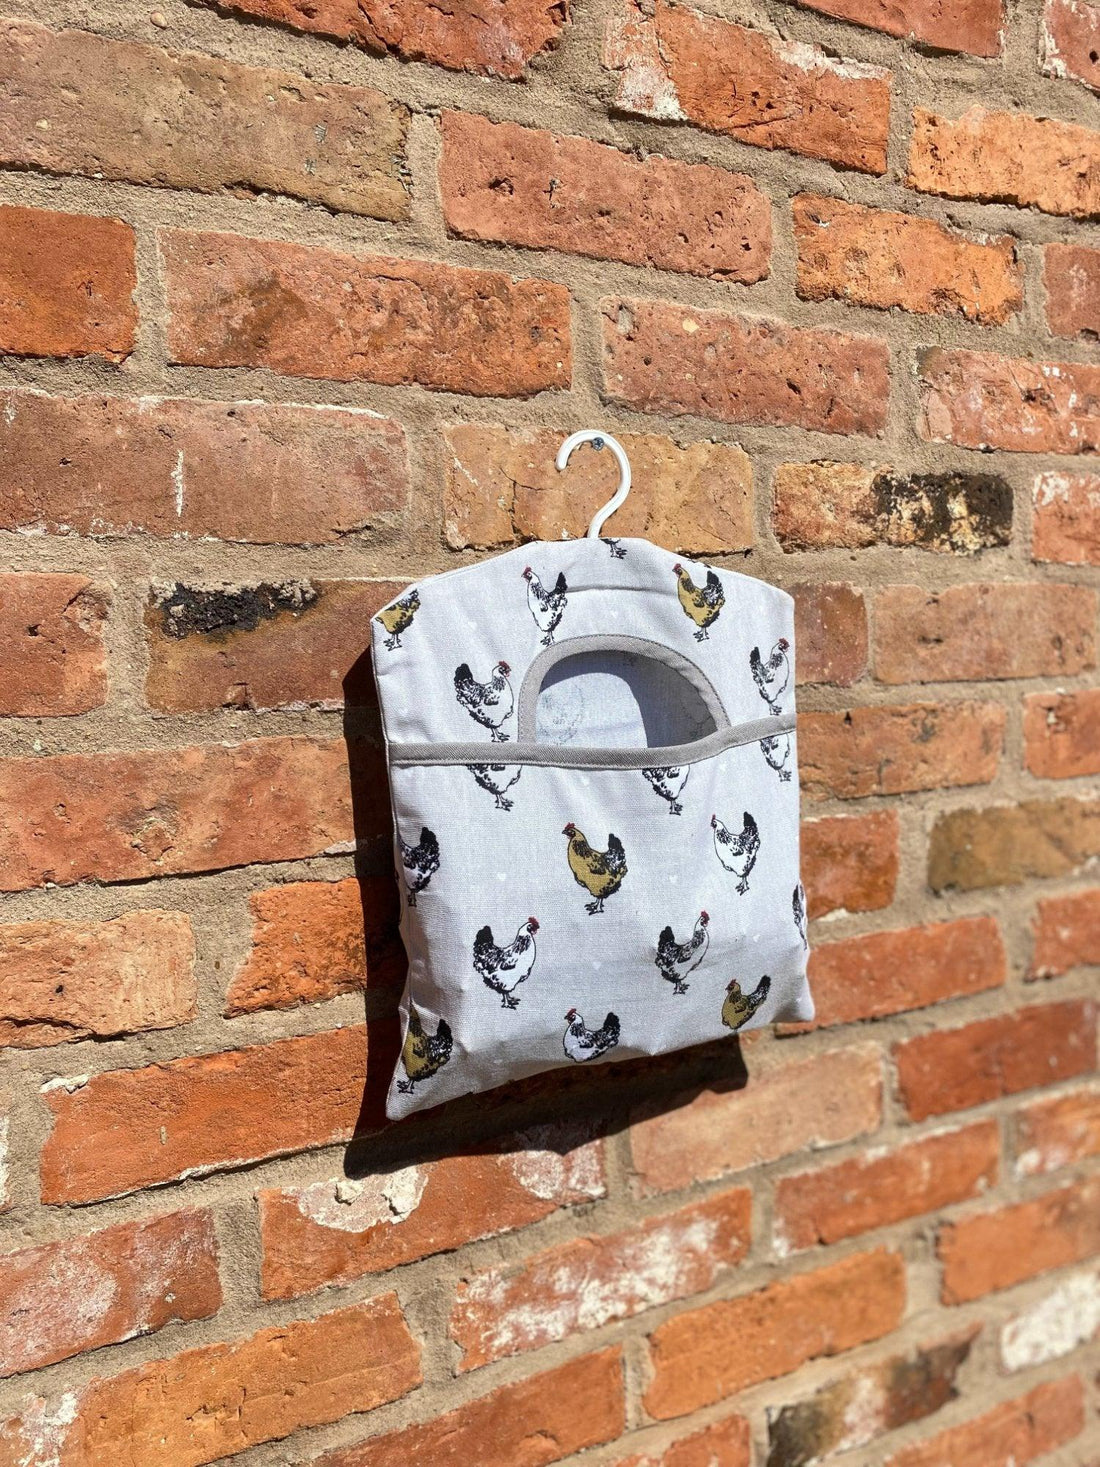 Peg Bag With A Chicken Print Design - £12.99 - Decorative Kitchen Items 